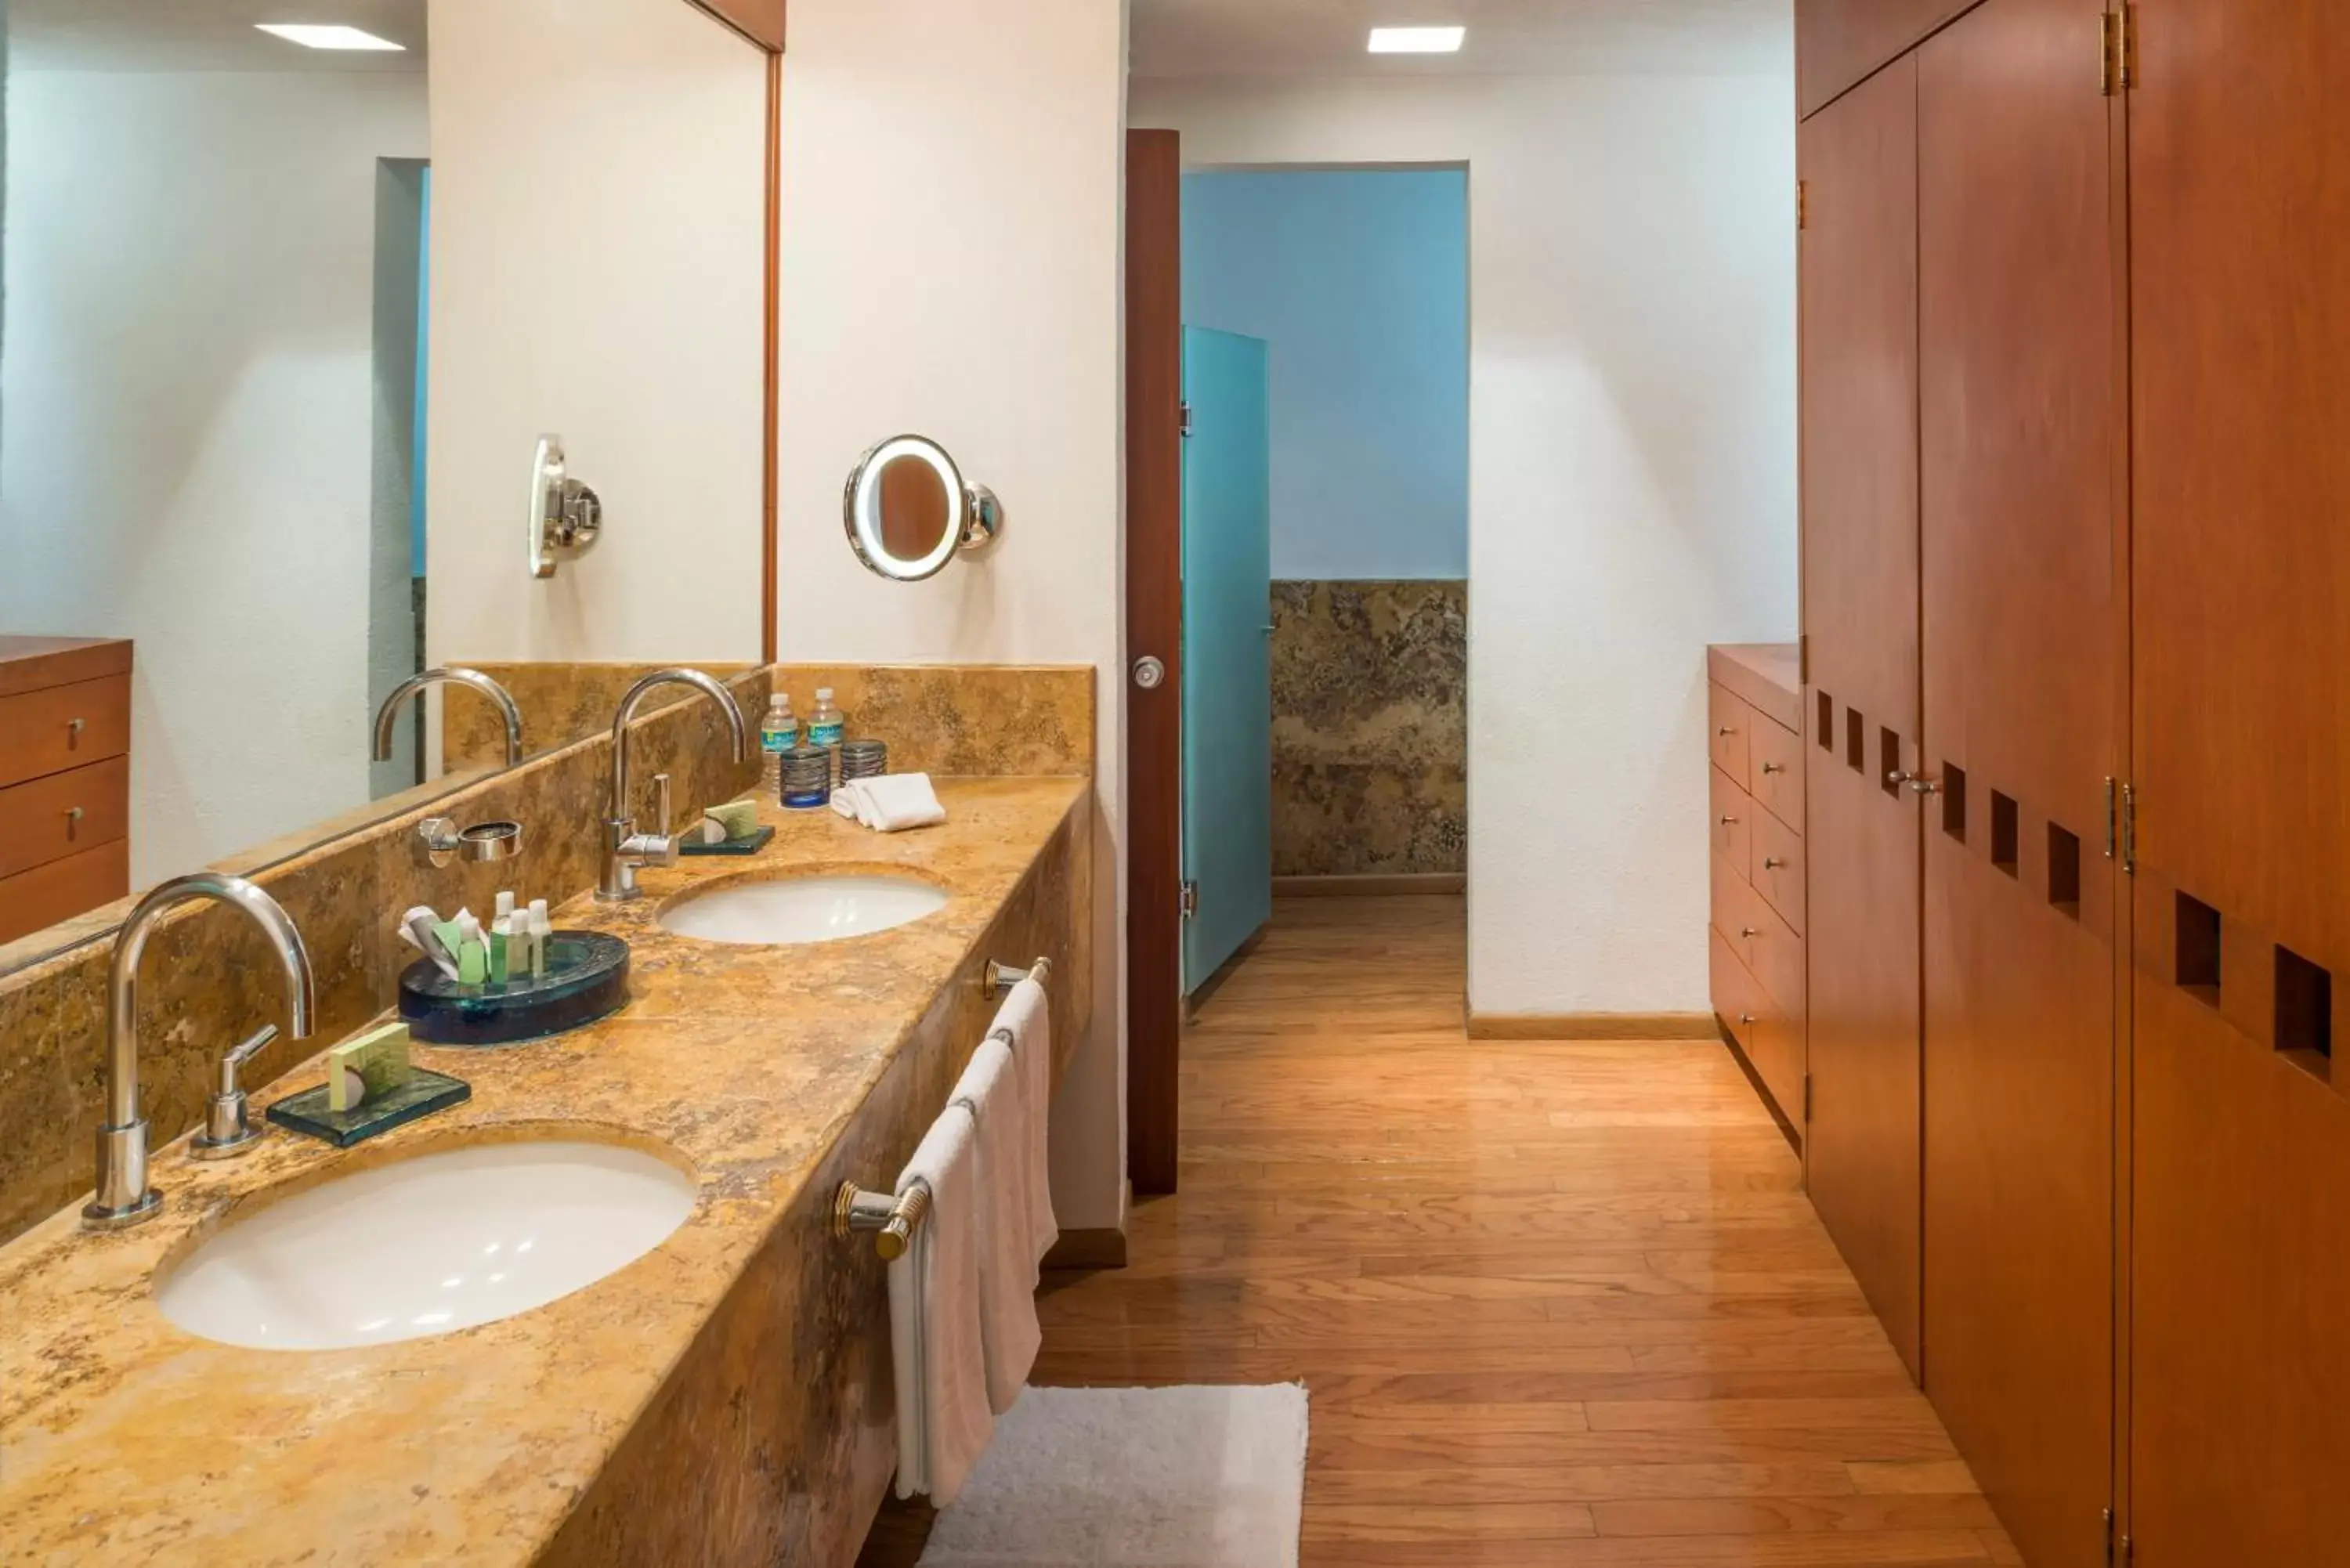 Photo of the whole room, Bathroom in Camino Real Guadalajara